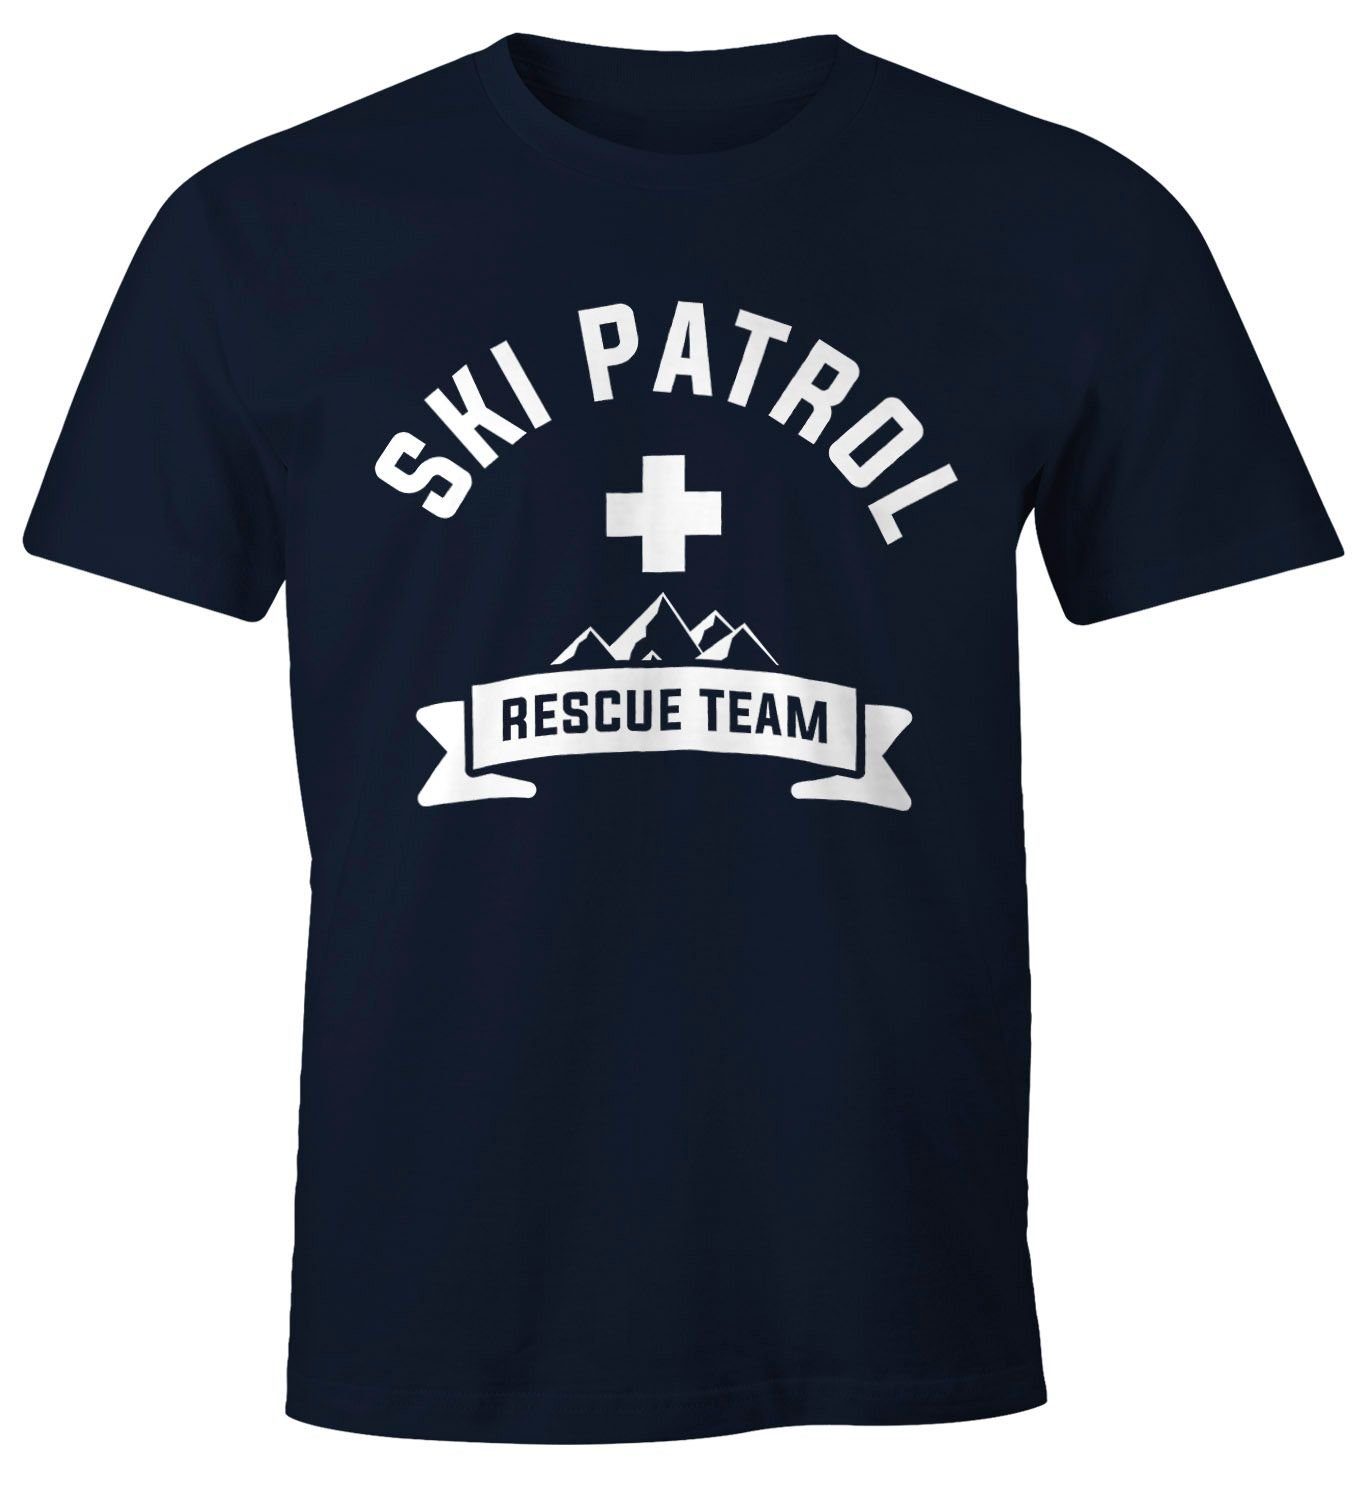 Rescue Patrol mit MoonWorks Apres-Ski Moonworks® T-Shirt Print Herren Fun-Shirt Print-Shirt Team navy